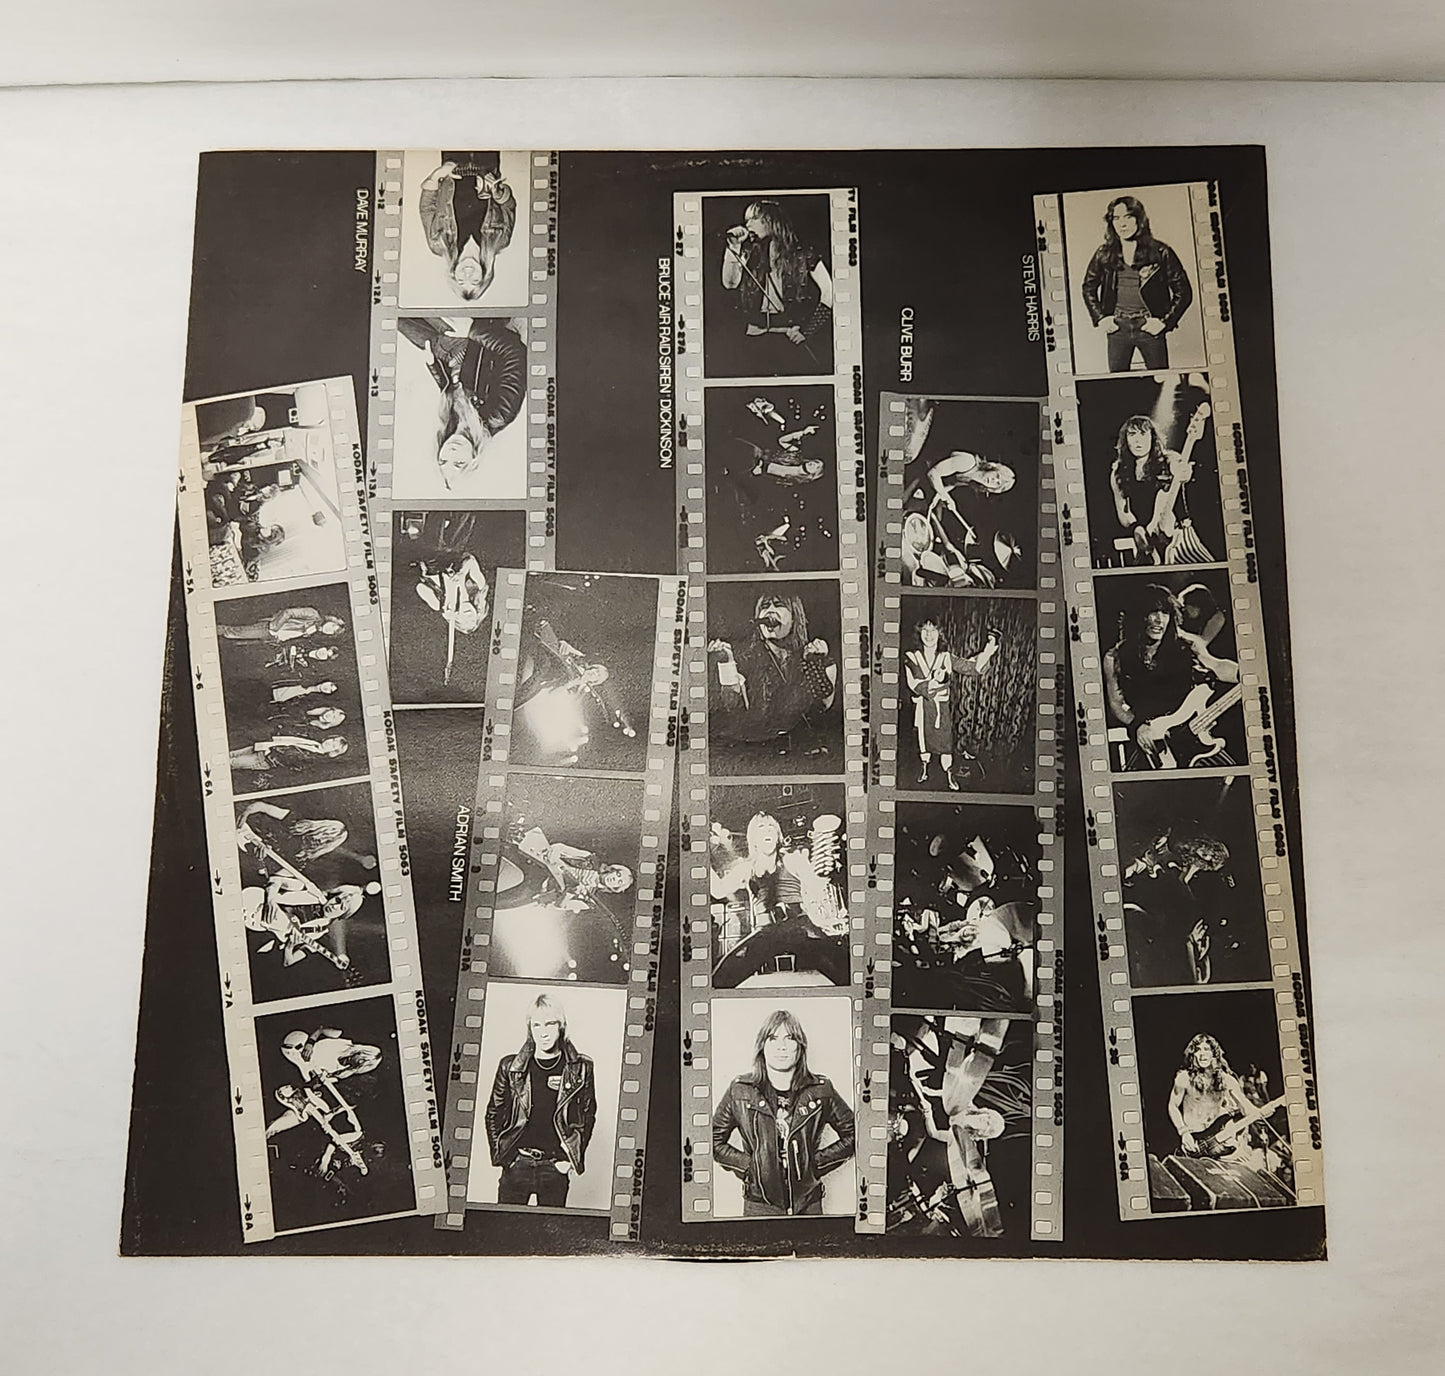 Motley Crue Promo "Shout At The Devil" 1983 Heavy Metal Hard Rock Record Album